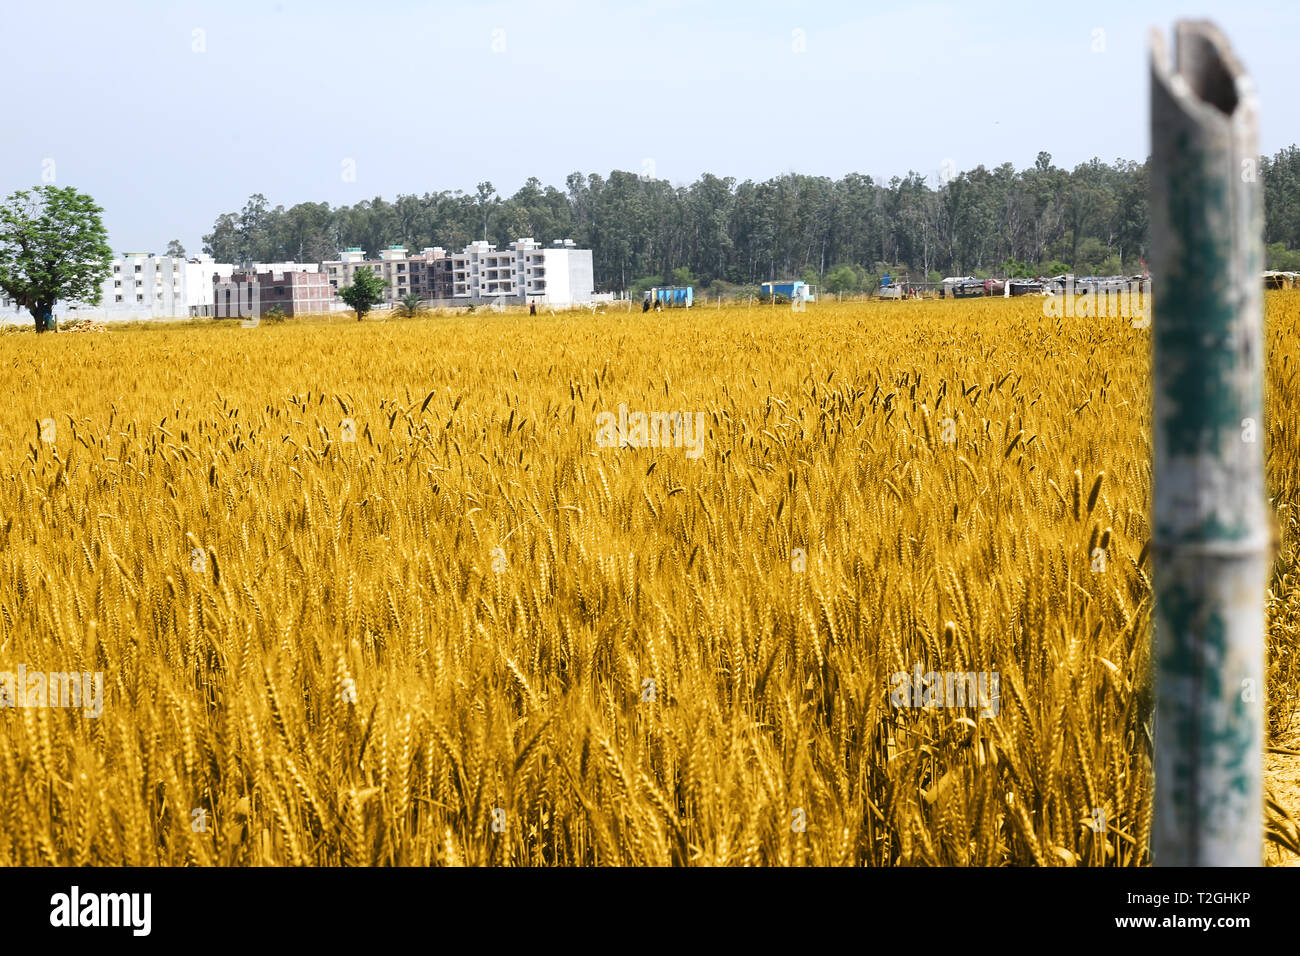 Photo of wheat fields for punjabi culture Stock Photo - Alamy